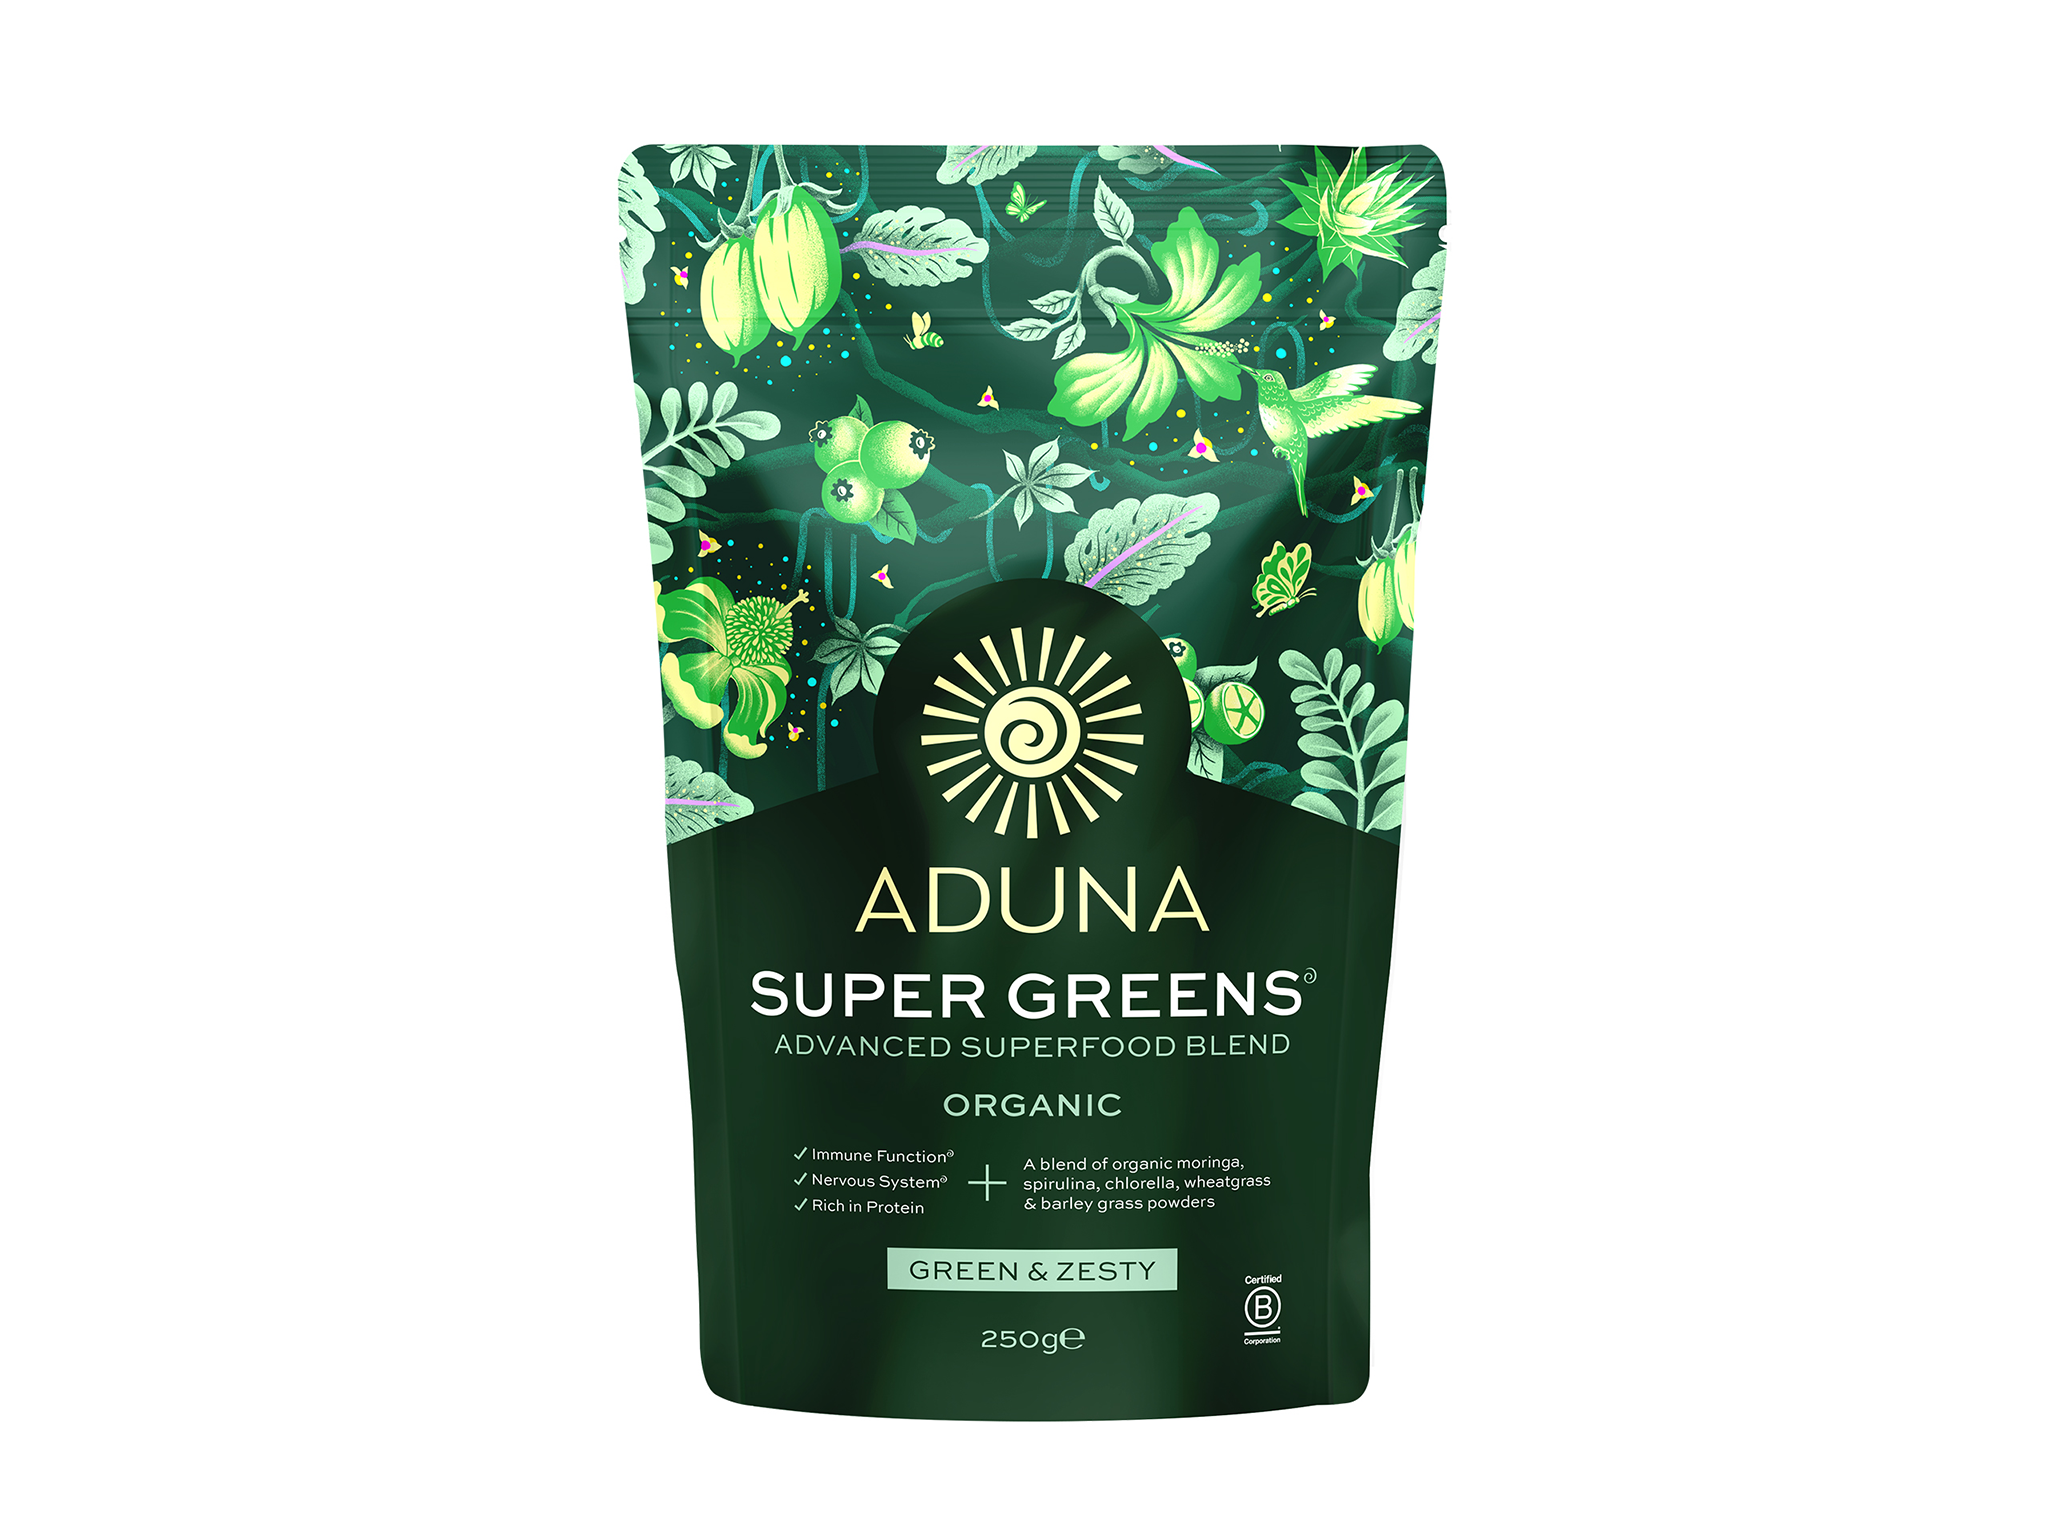 Aduna Superfood super greens